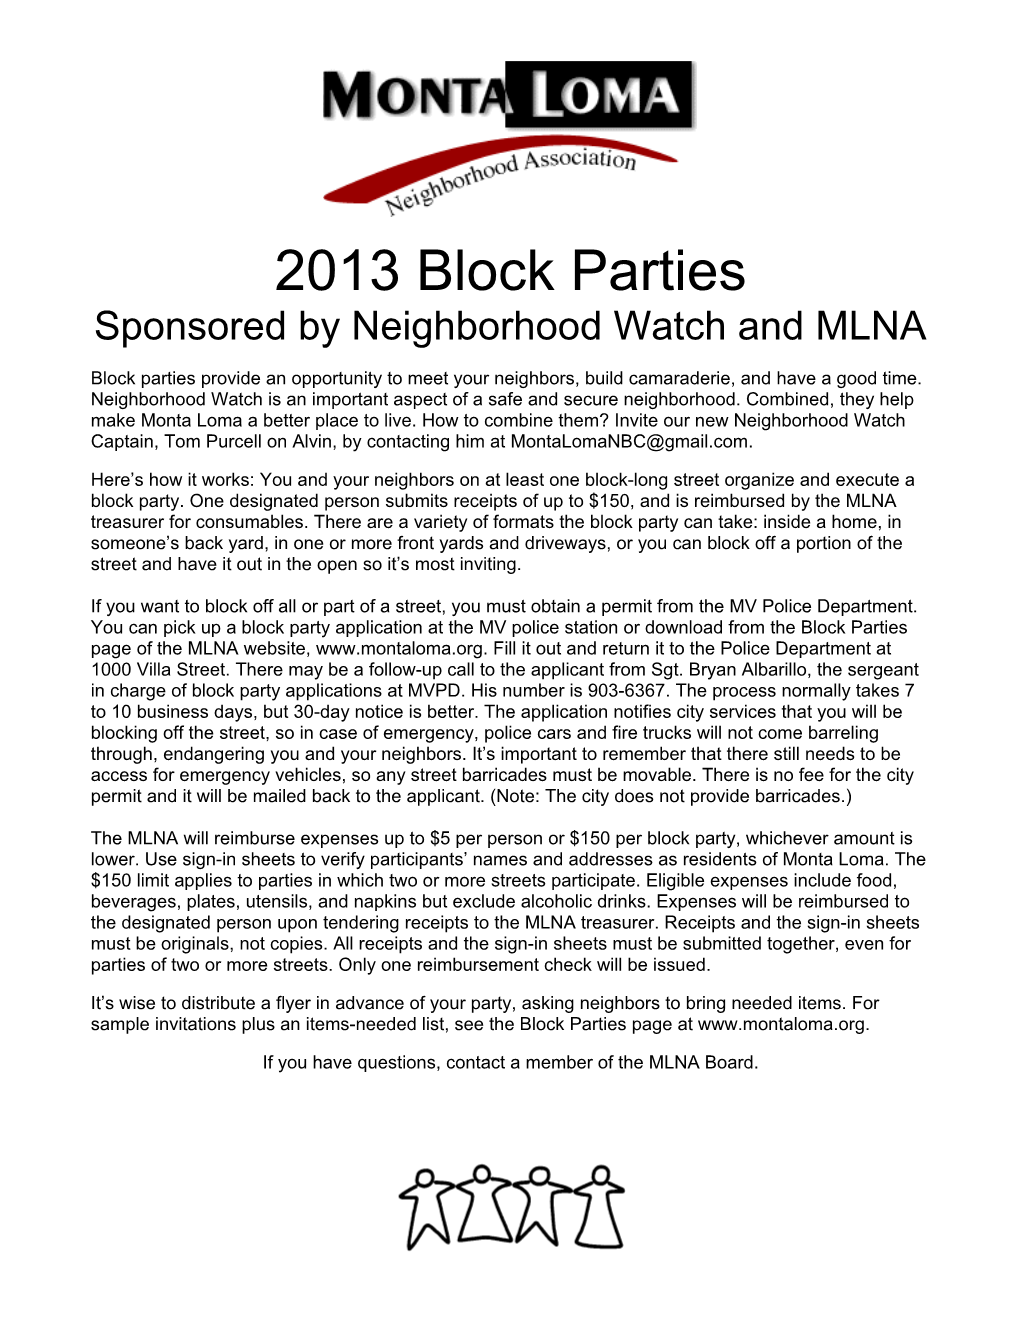 Sponsored by Neighborhood Watch and MLNA